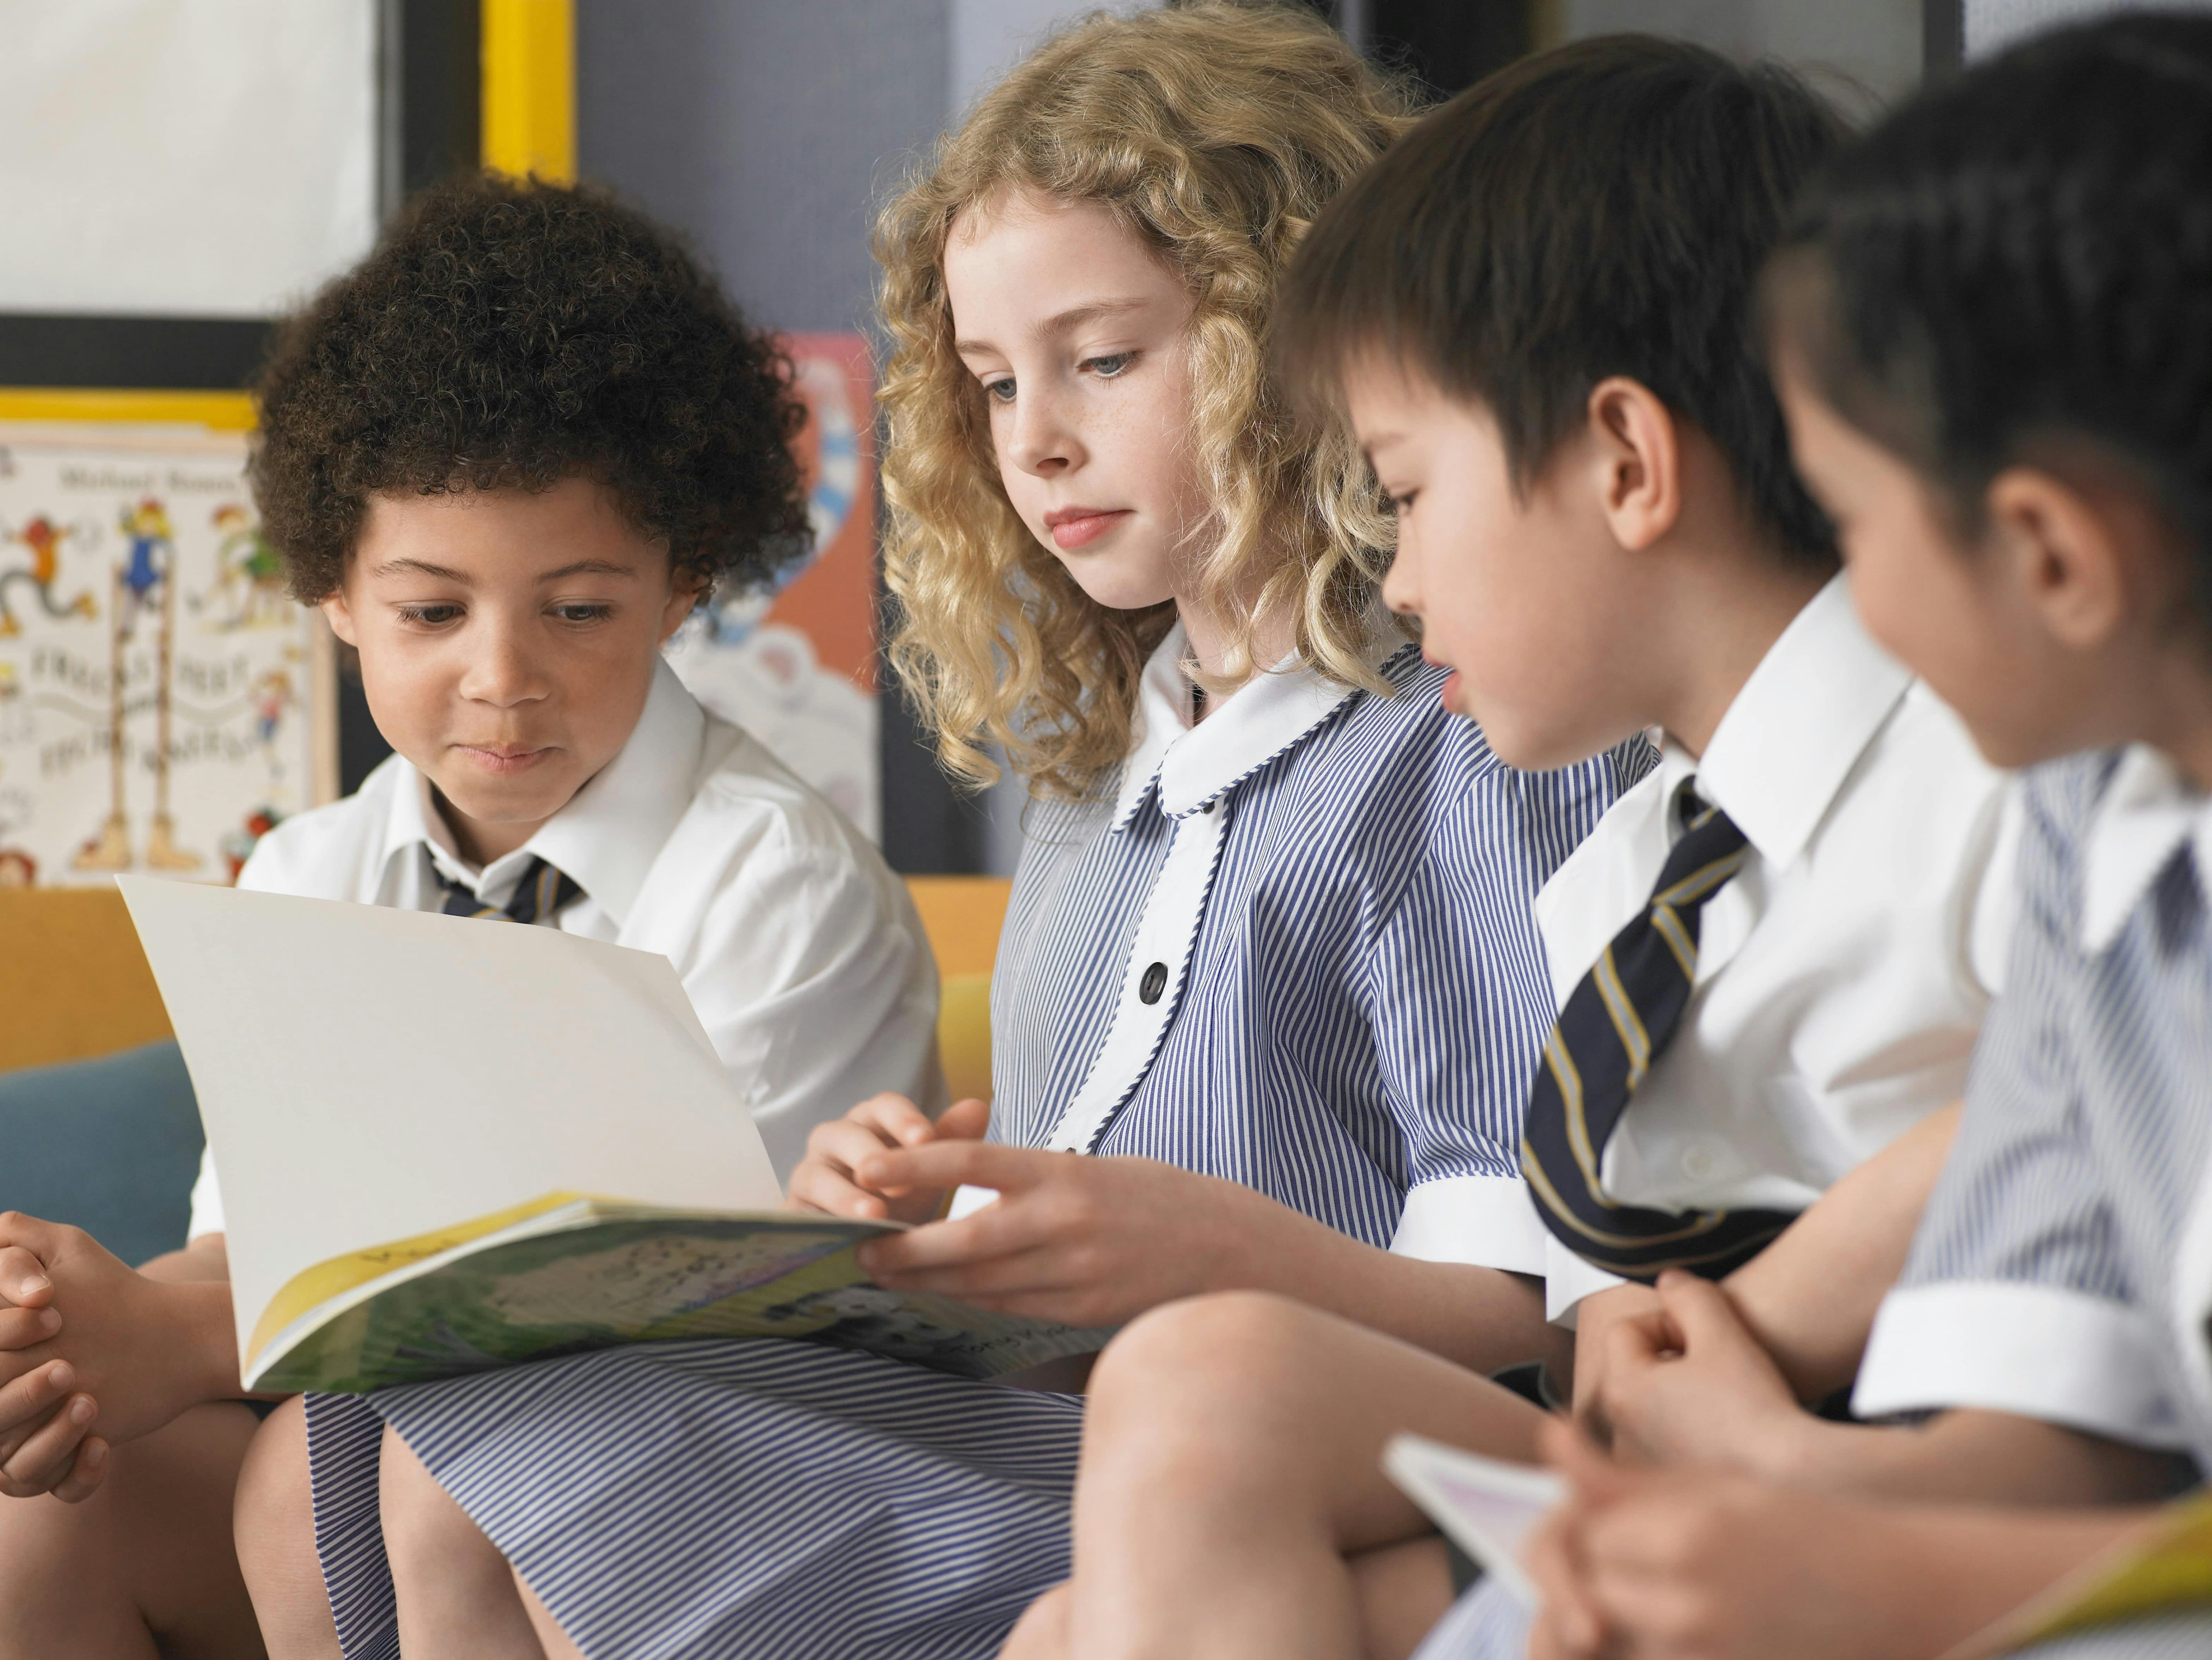 School children reading a book.